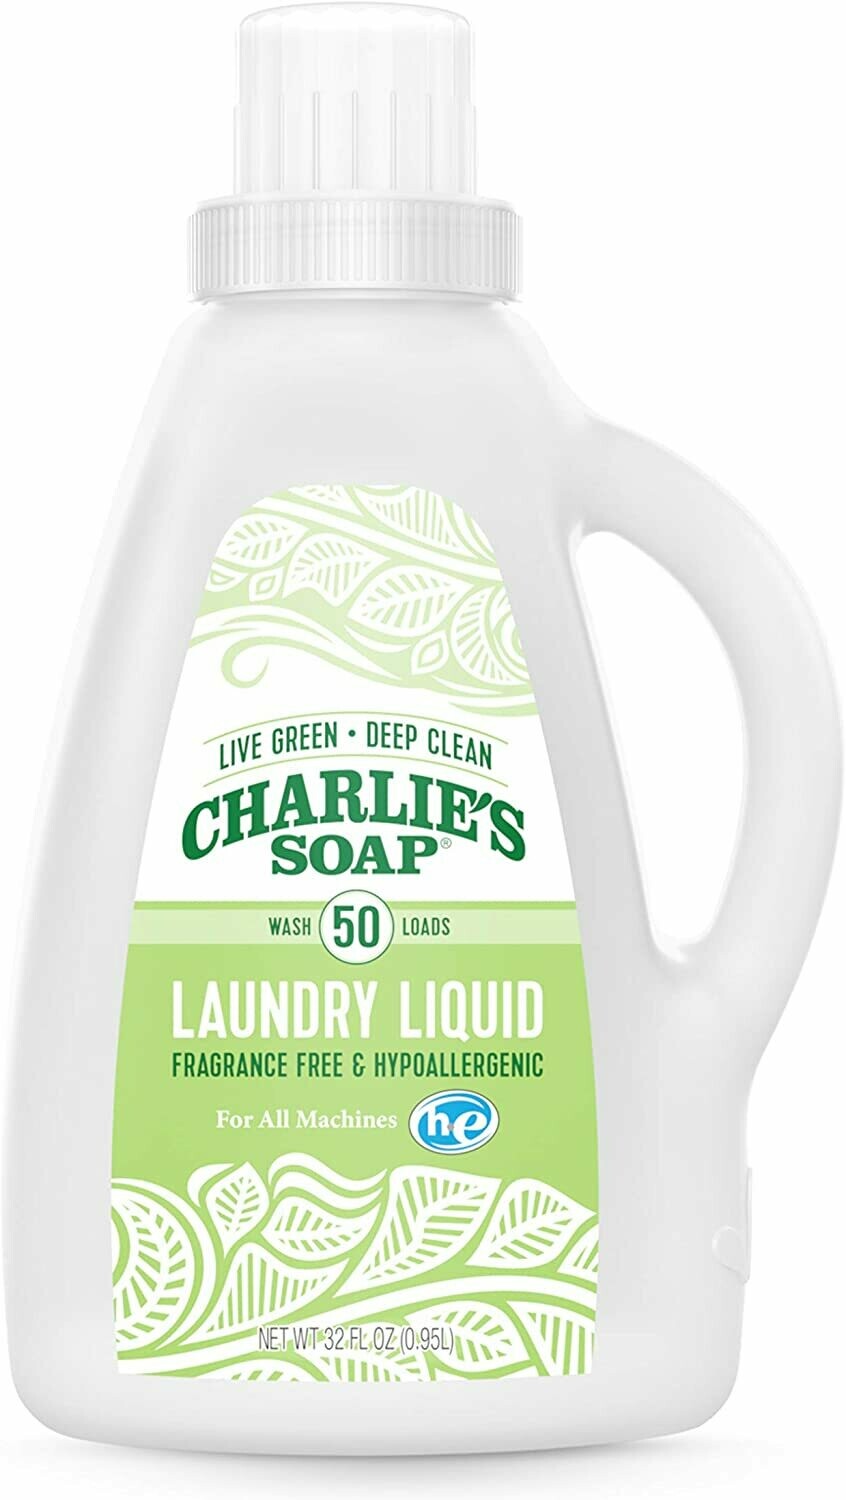 Charlie’s Soap Laundry